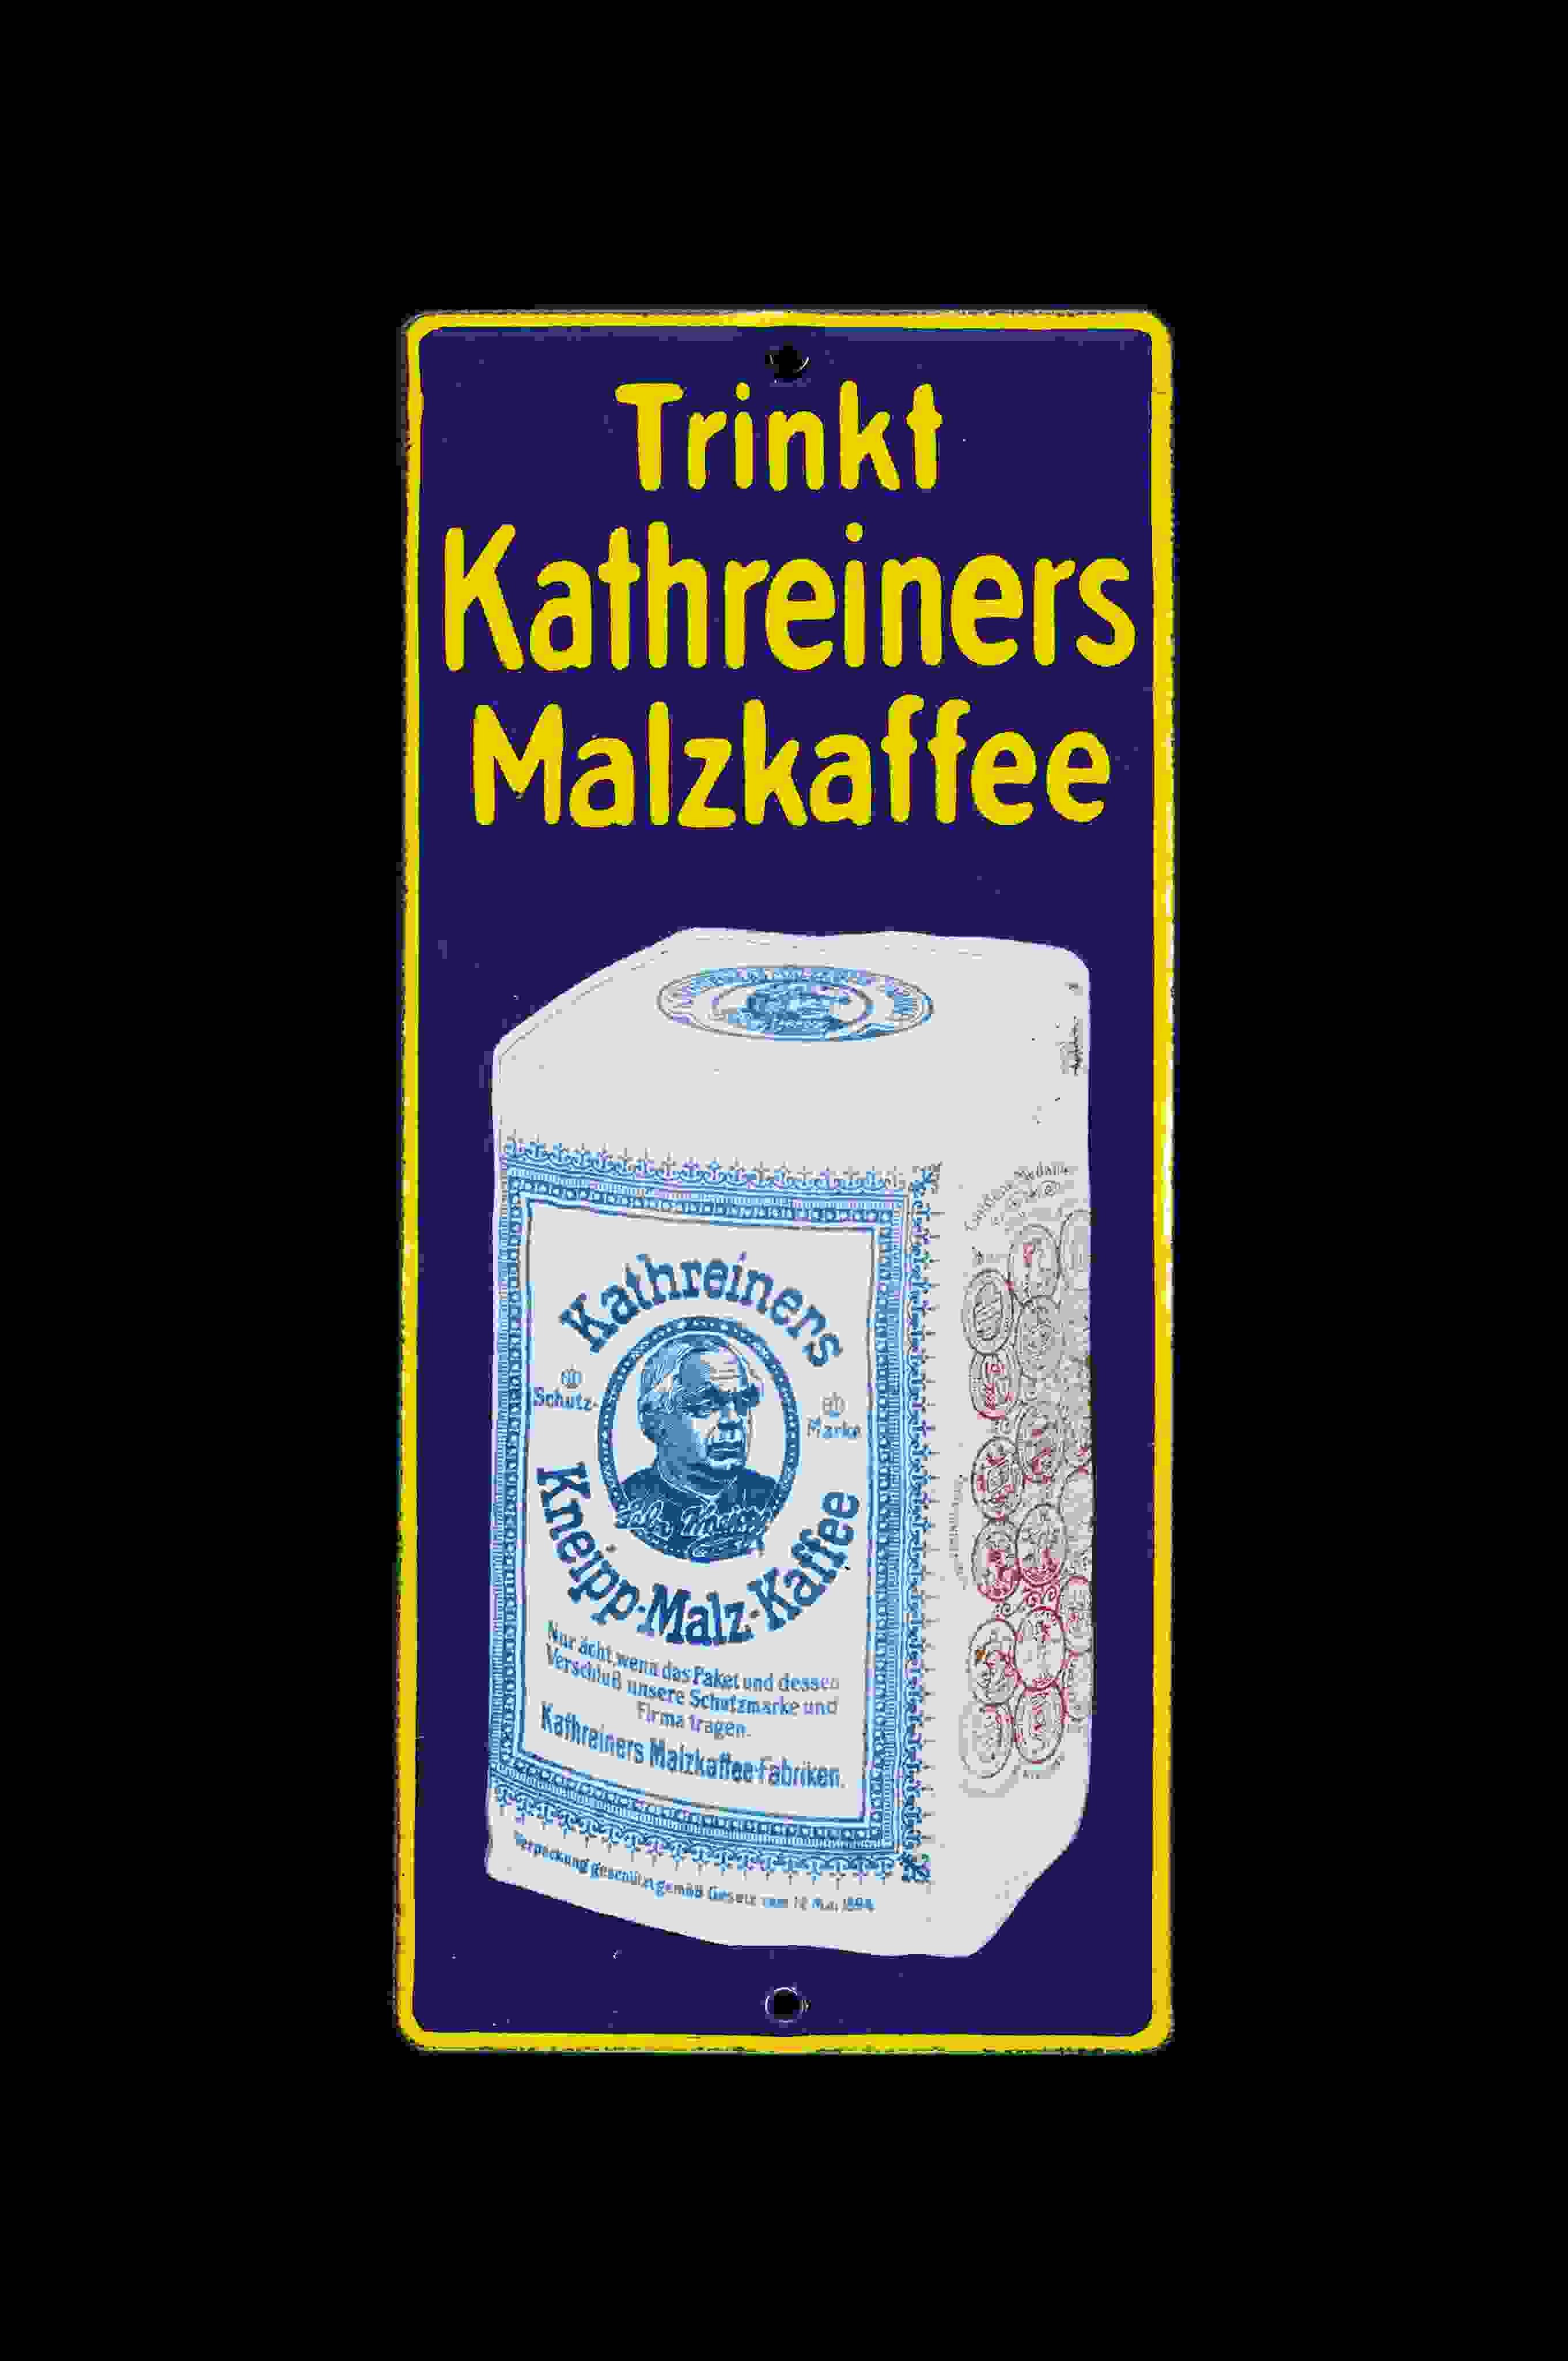 Kathreiners Malzkaffee 